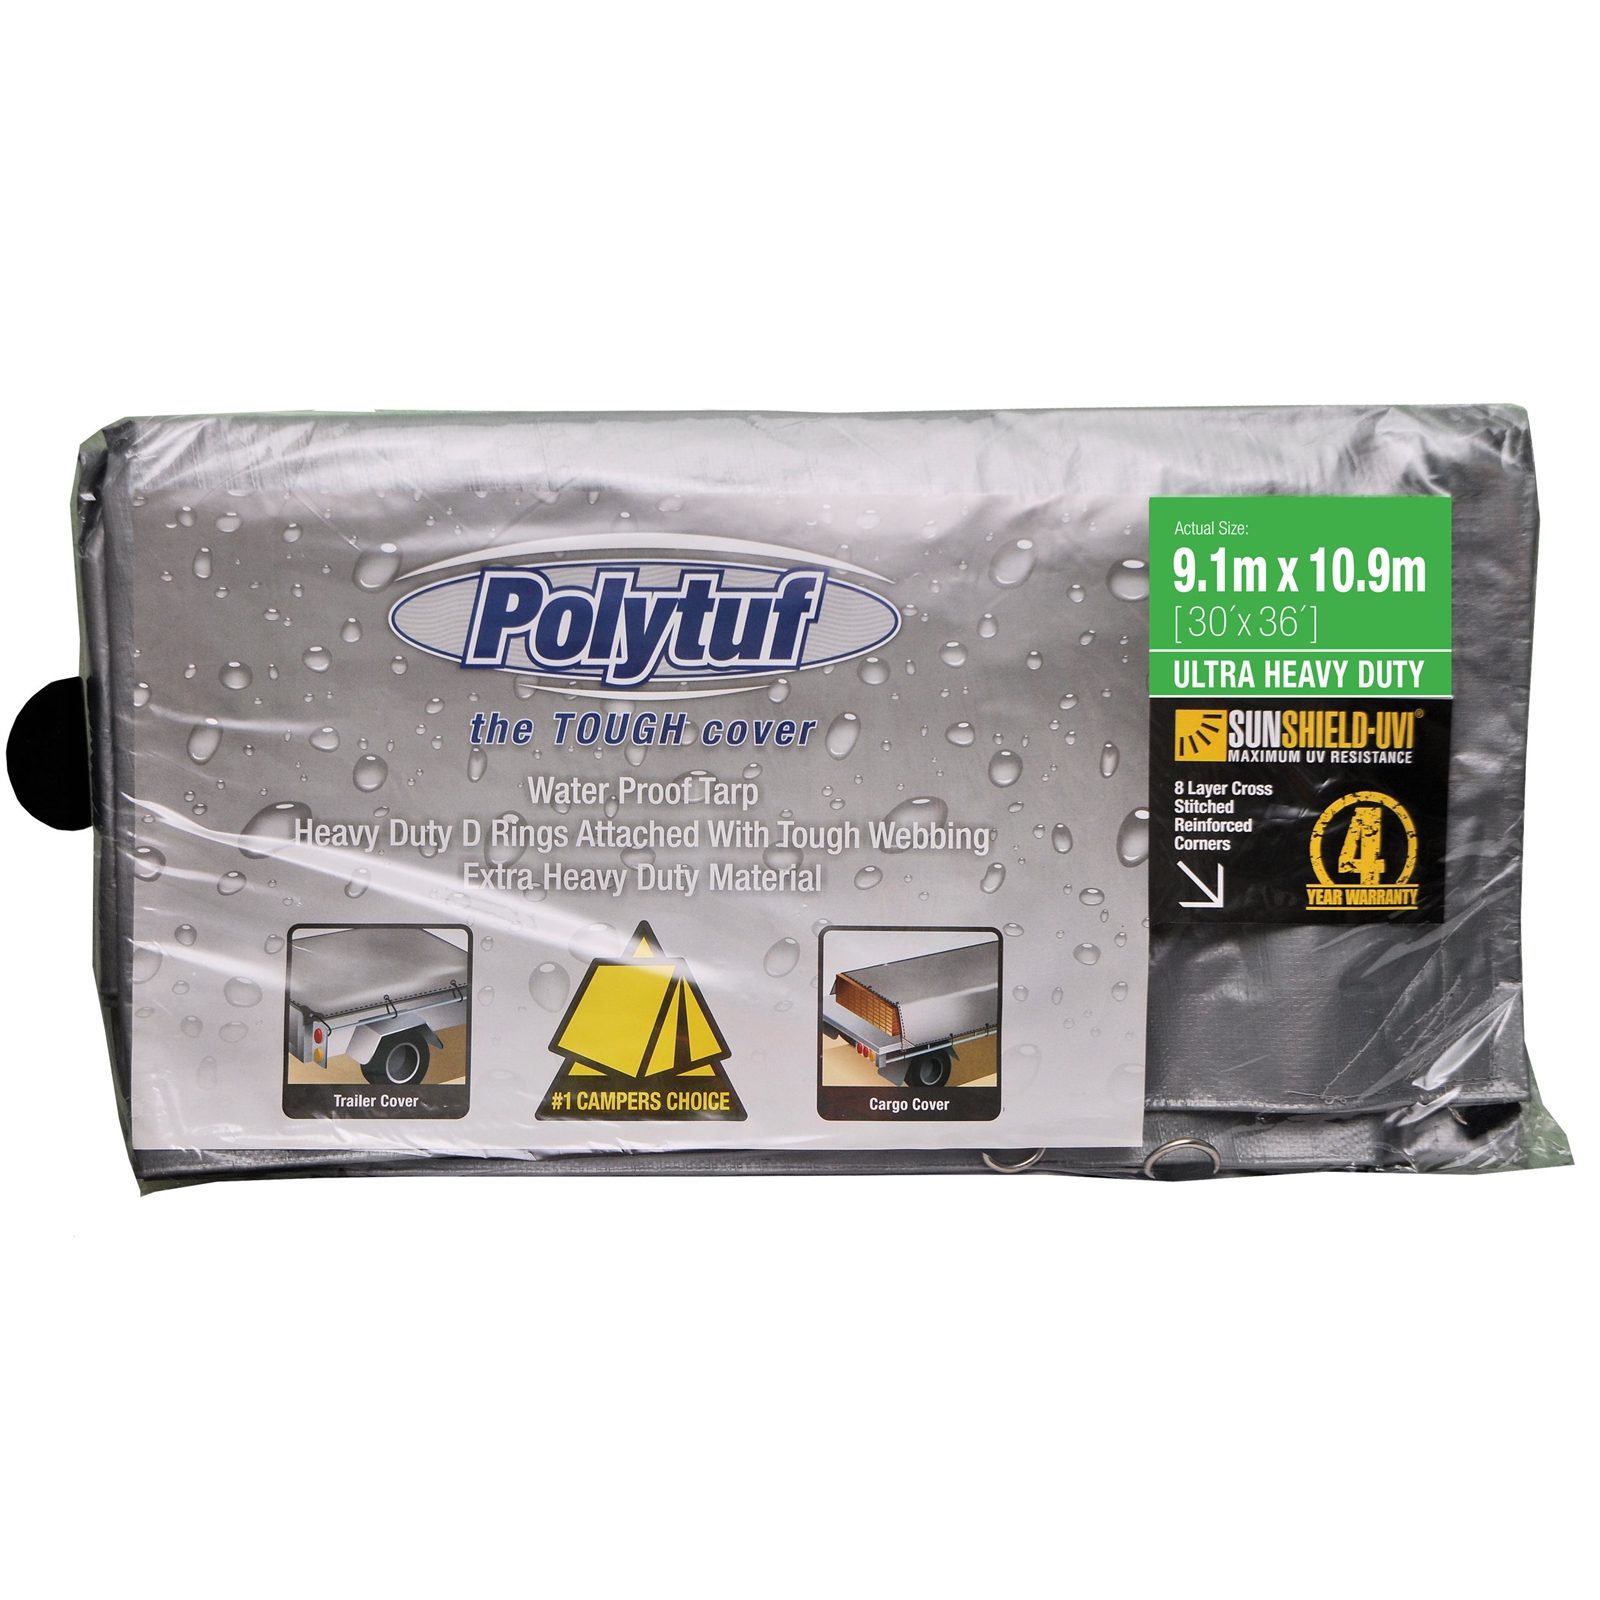 Polytuf 9.1 x 10.9m Silver and Black Extra Heavy Duty Tarpaulin